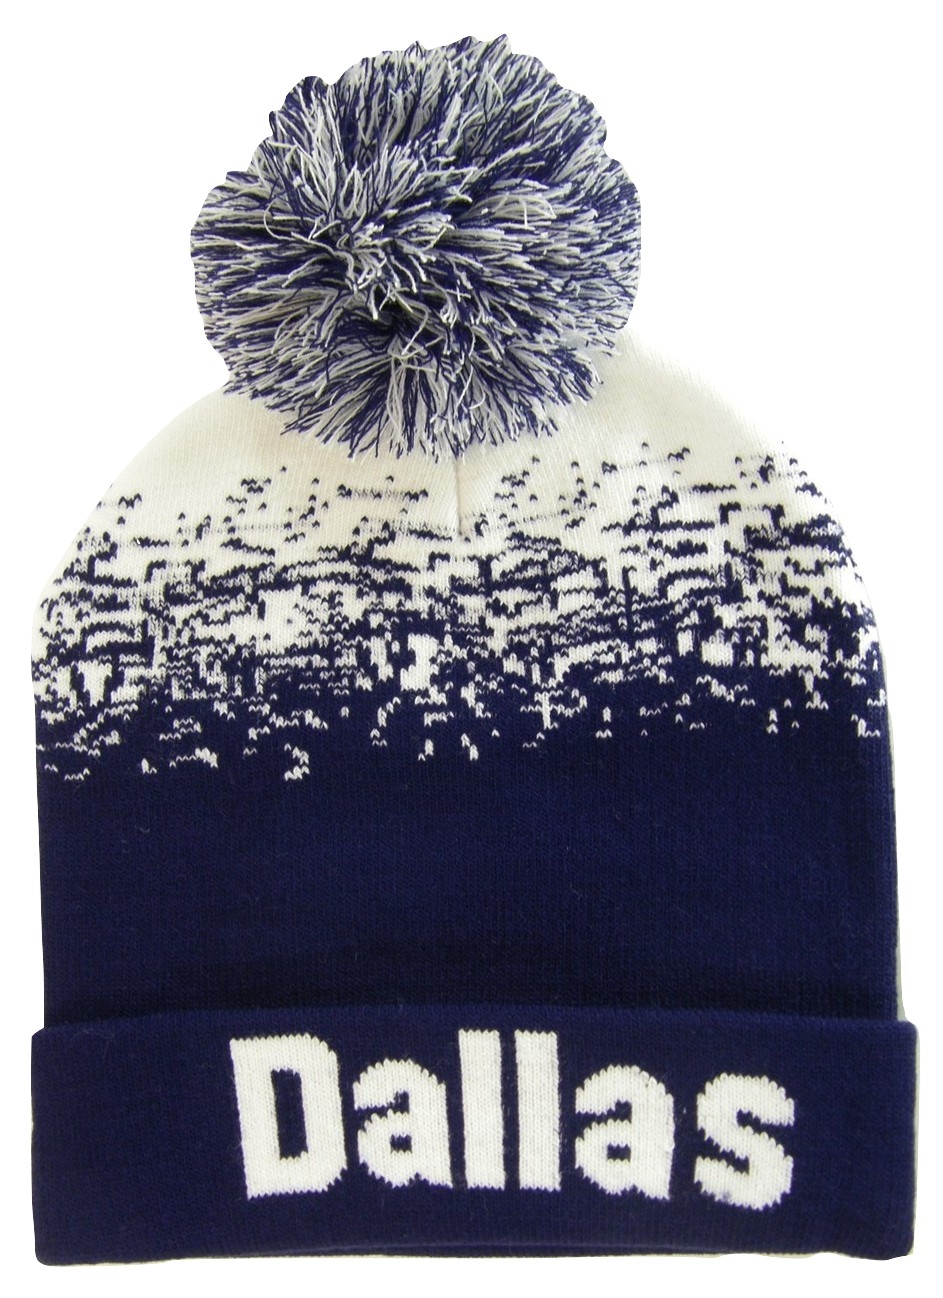 Dallas Men's Digital Fade Winter Knit Pom Beanie Hat (White/Navy) - image 1 of 1